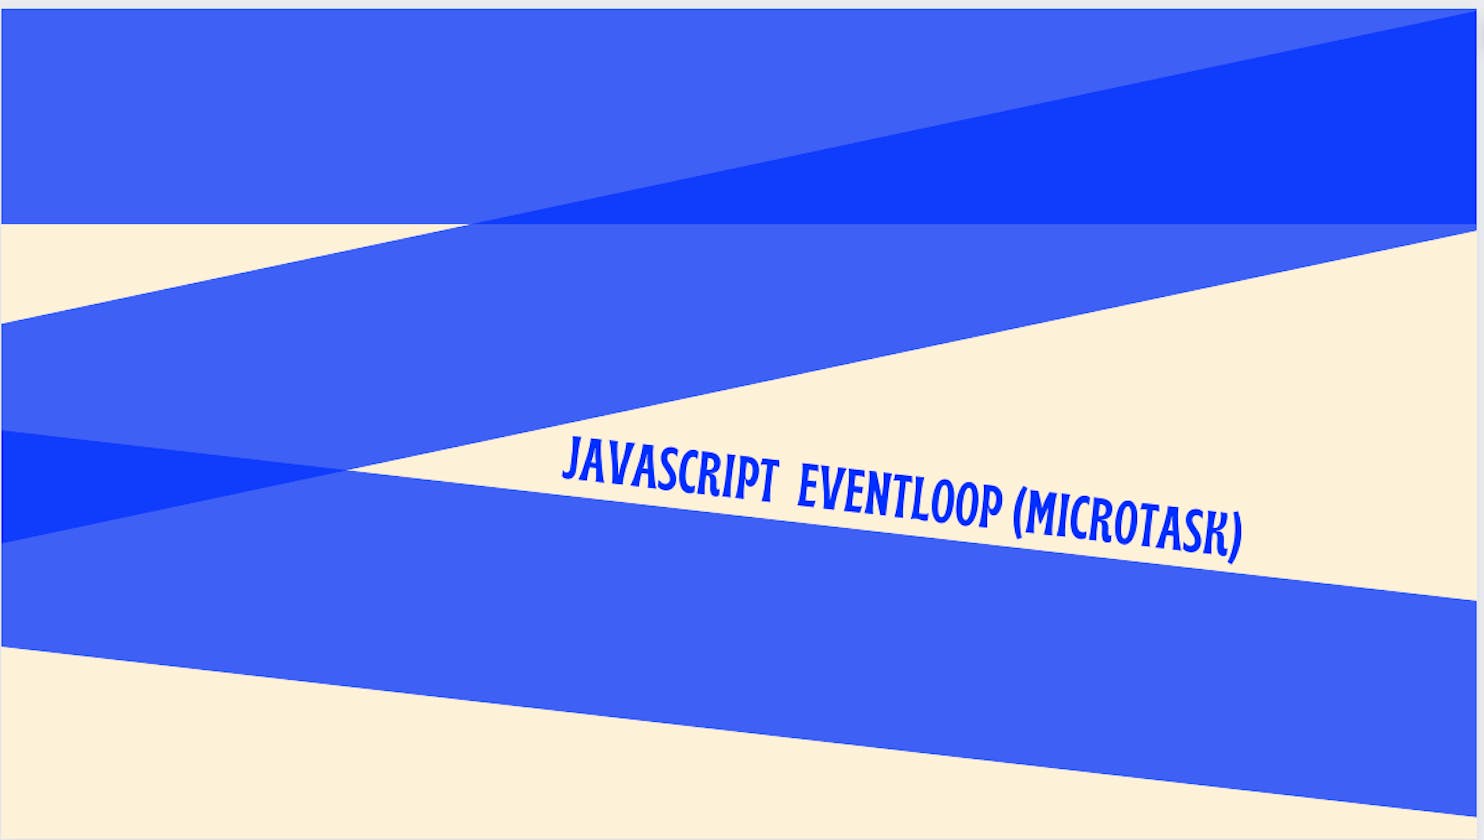 Demystifying JavaScript's Event Loop: Microtask queue (Part 2)